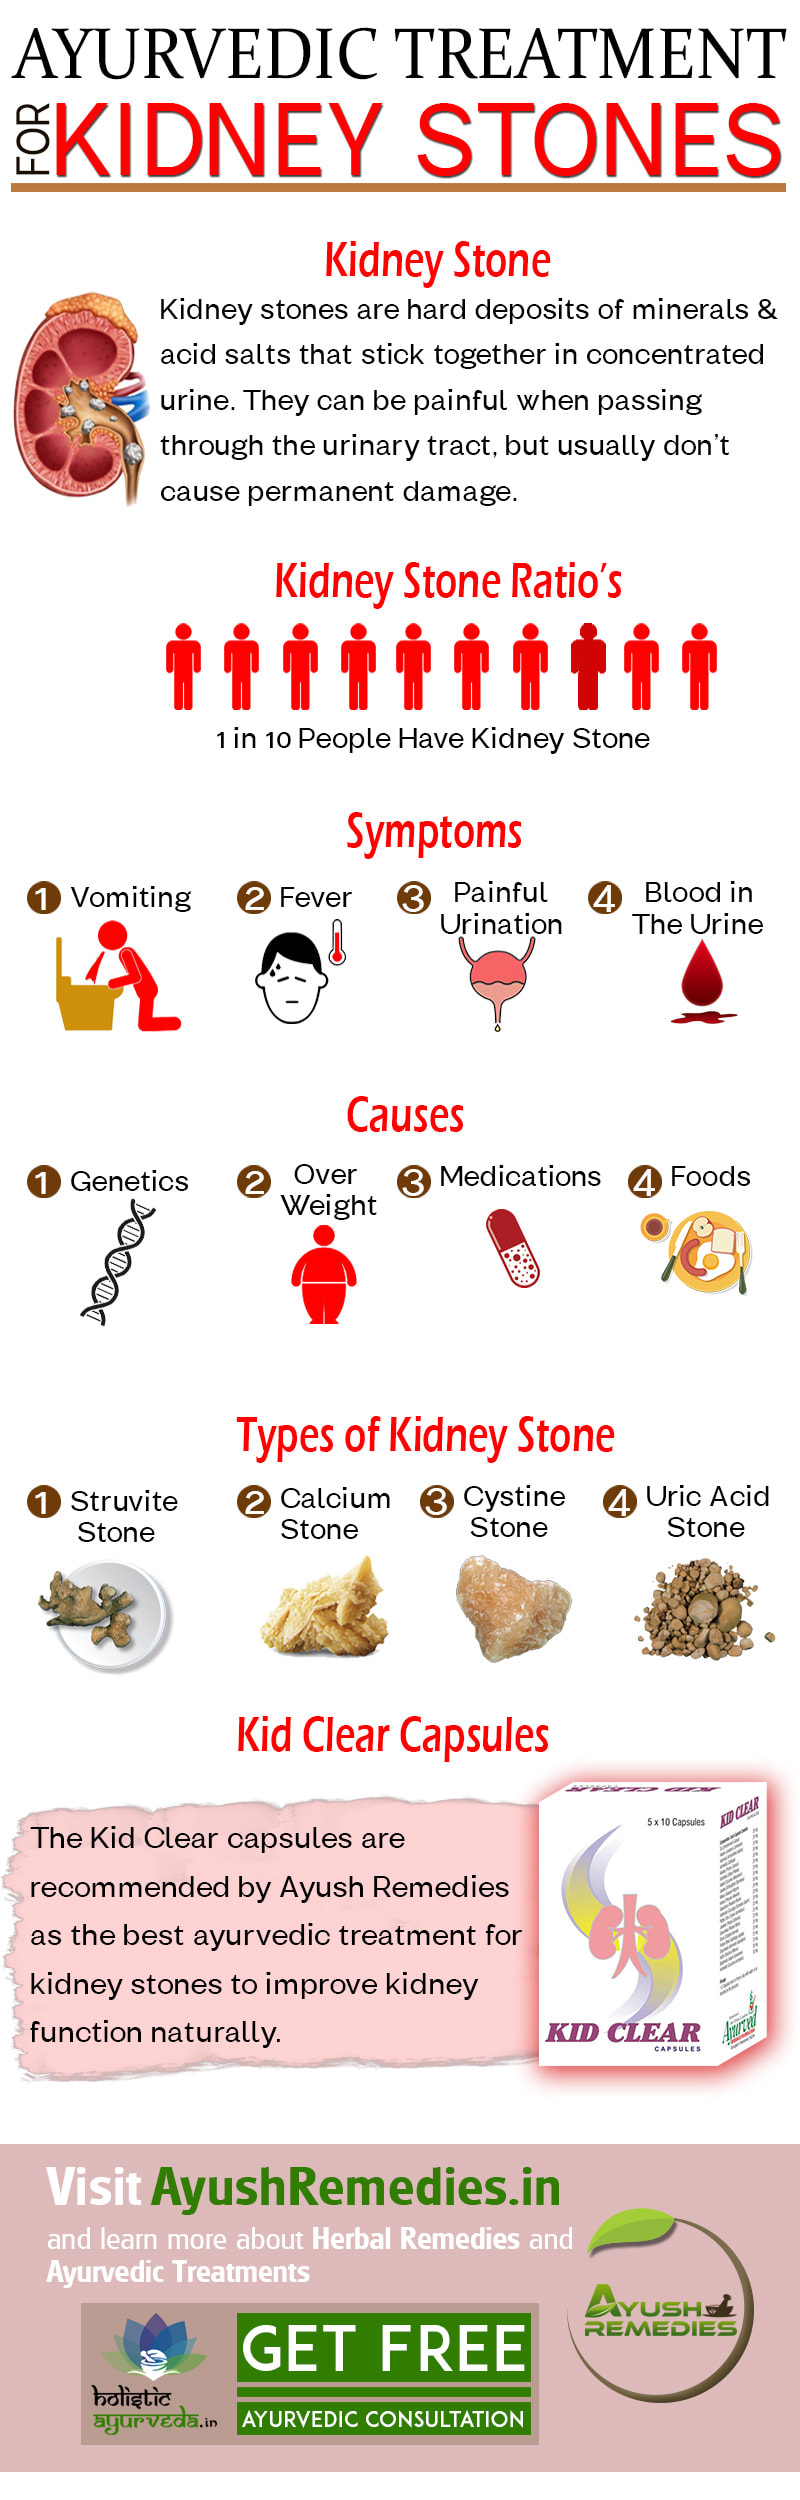 Kidney Stone Treatment infographic